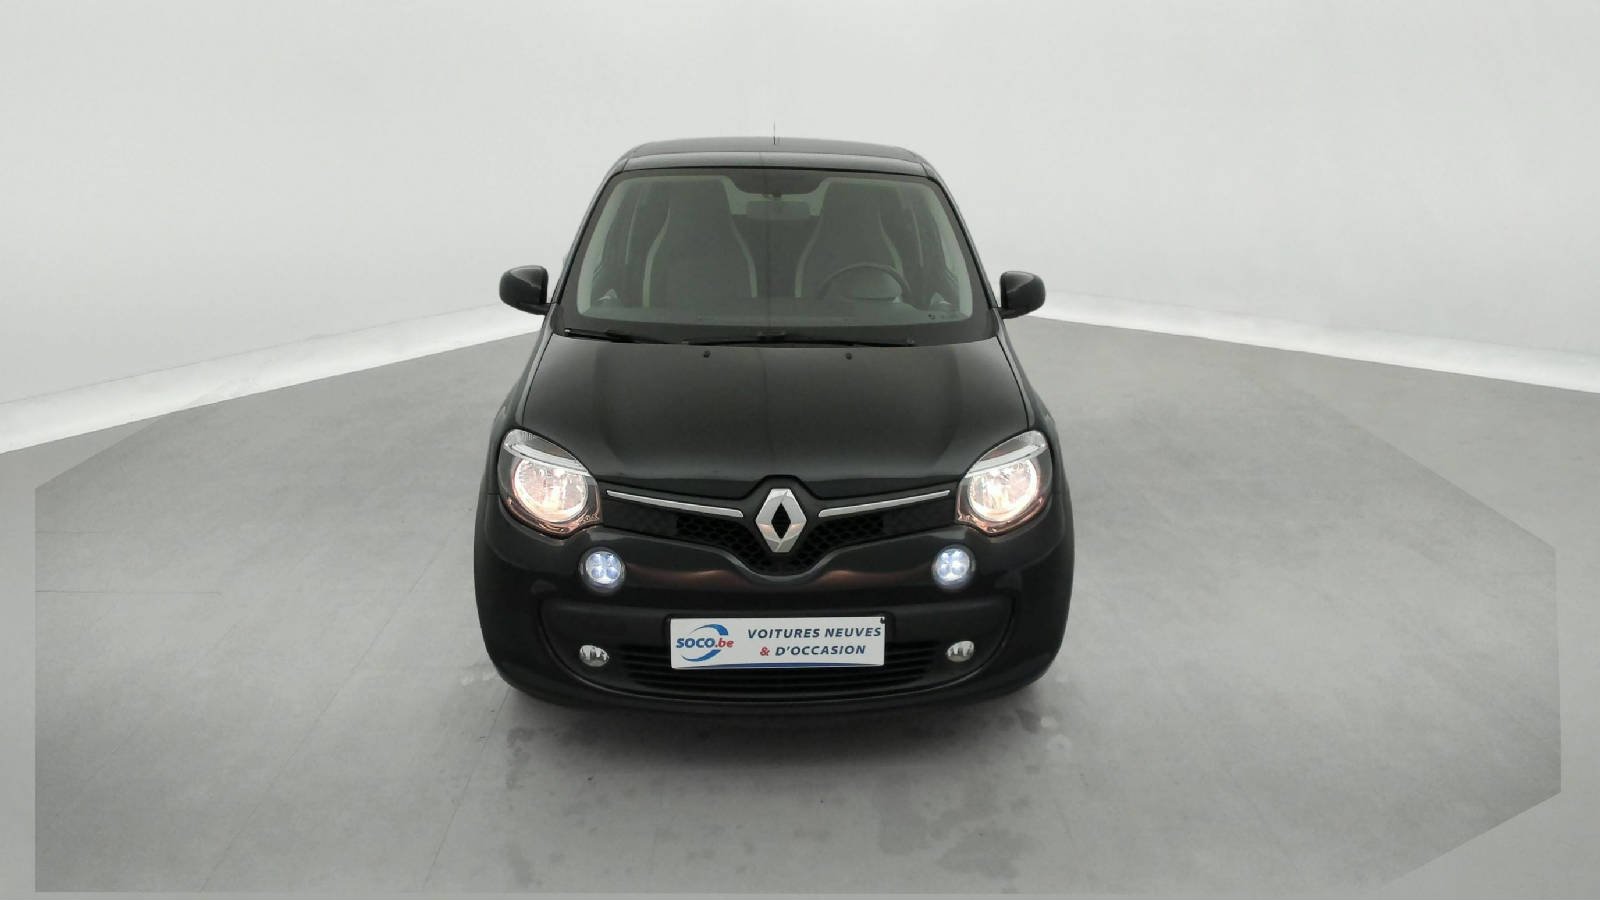 Renault Twingo 1.2 Liberty used buy in Hechingen Price 999 eur